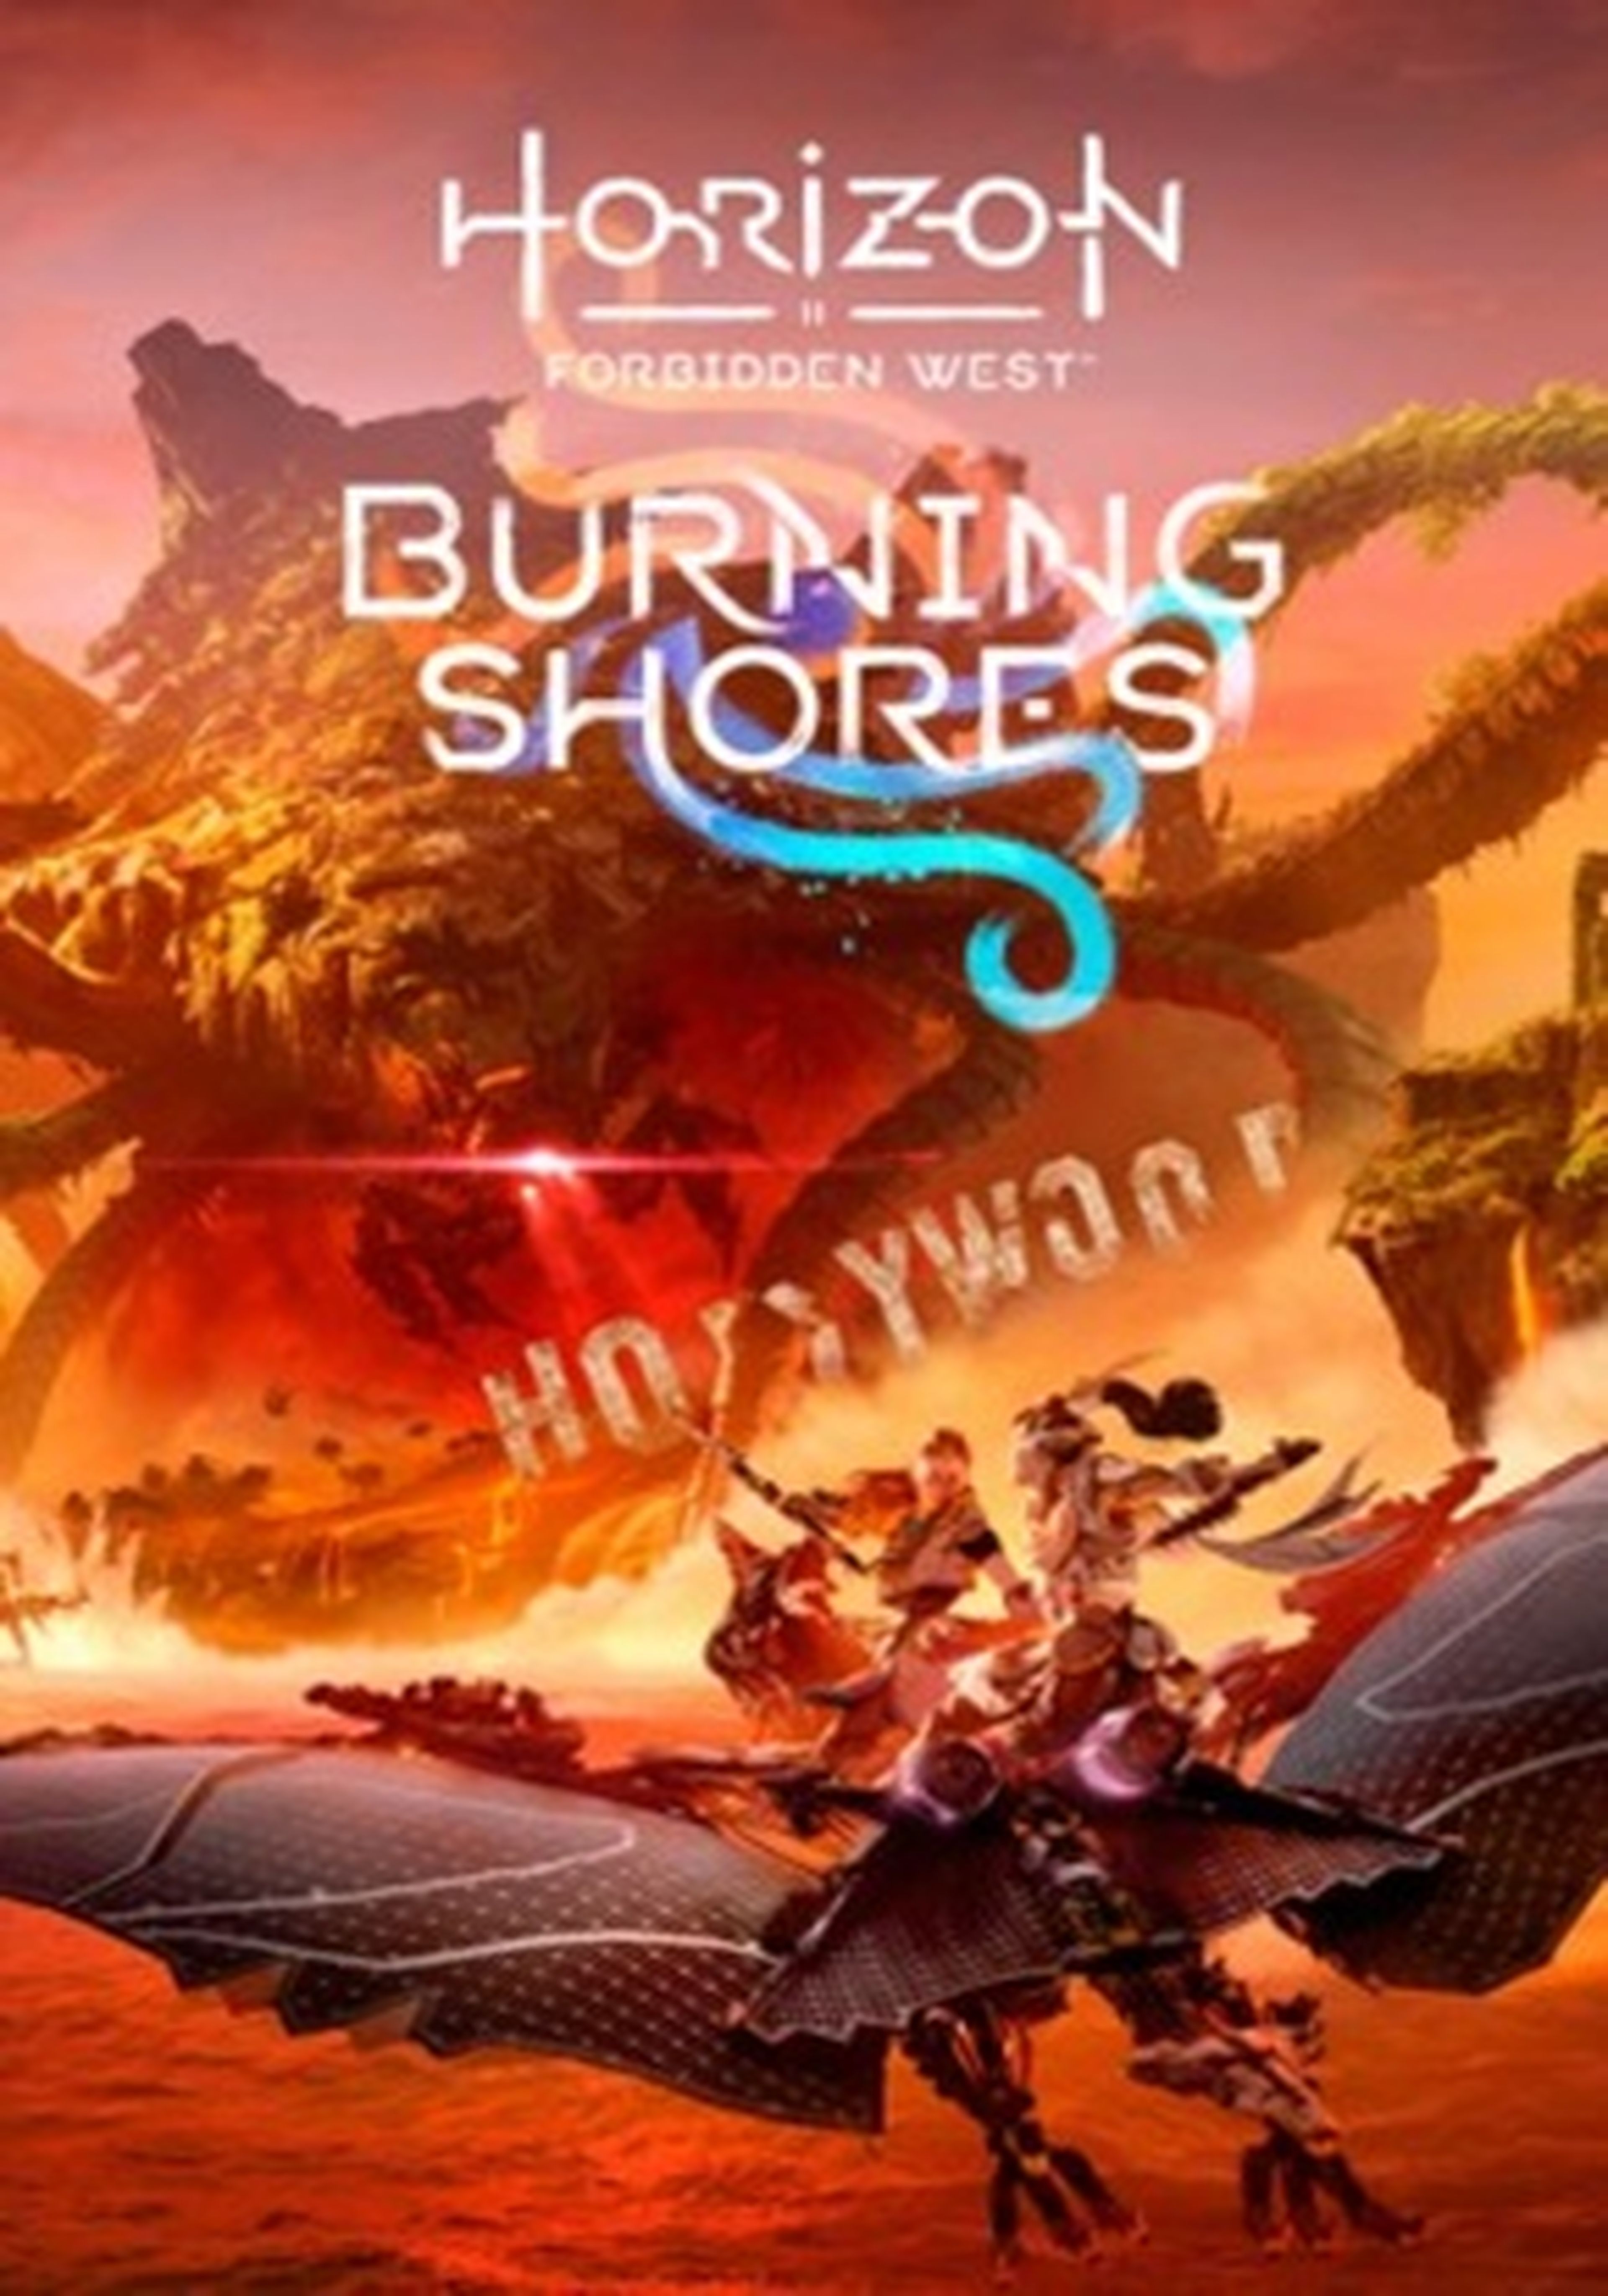 Metacritic improving moderation after abusive, disrespectful Horizon  Forbidden West Burning Shores reviews : r/KotakuInAction